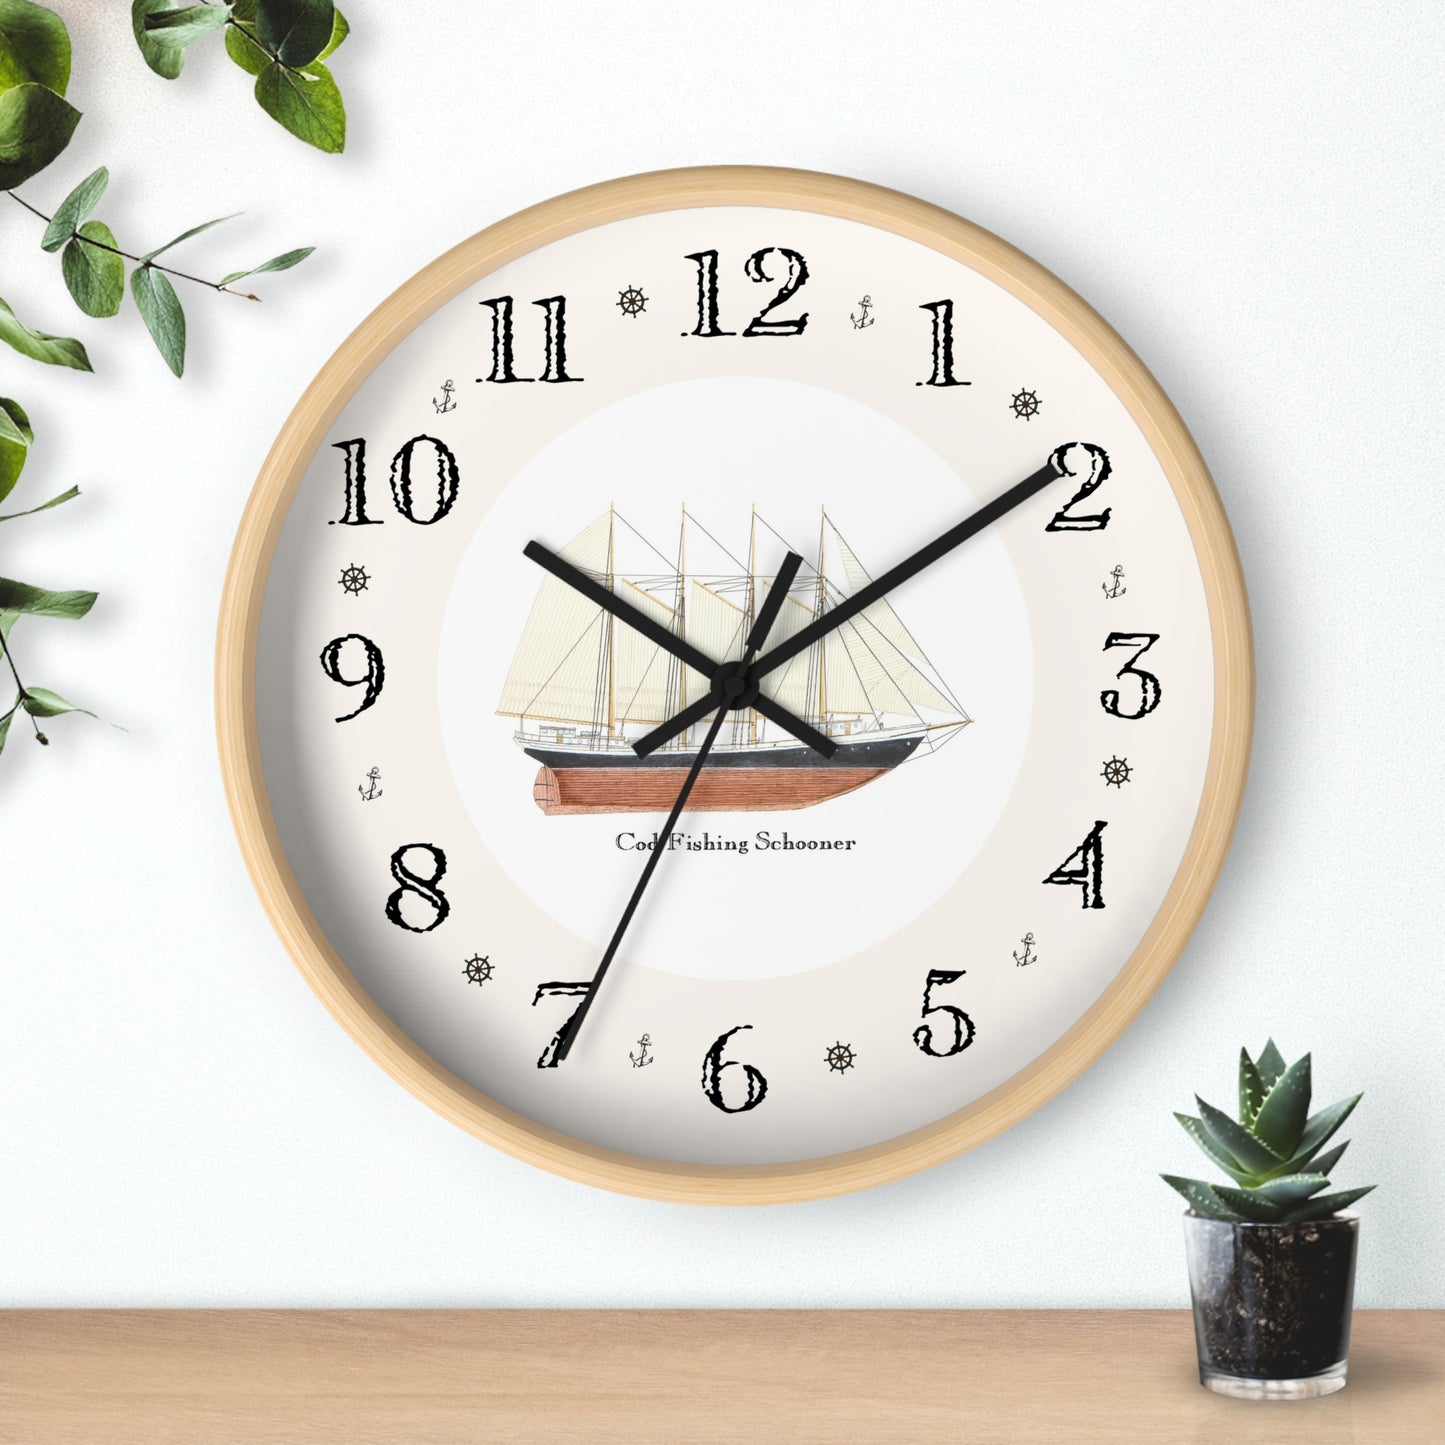 The Atlantic Pearl Heirloom Designer Clock featrures the classic Cod Fishing Schooner.